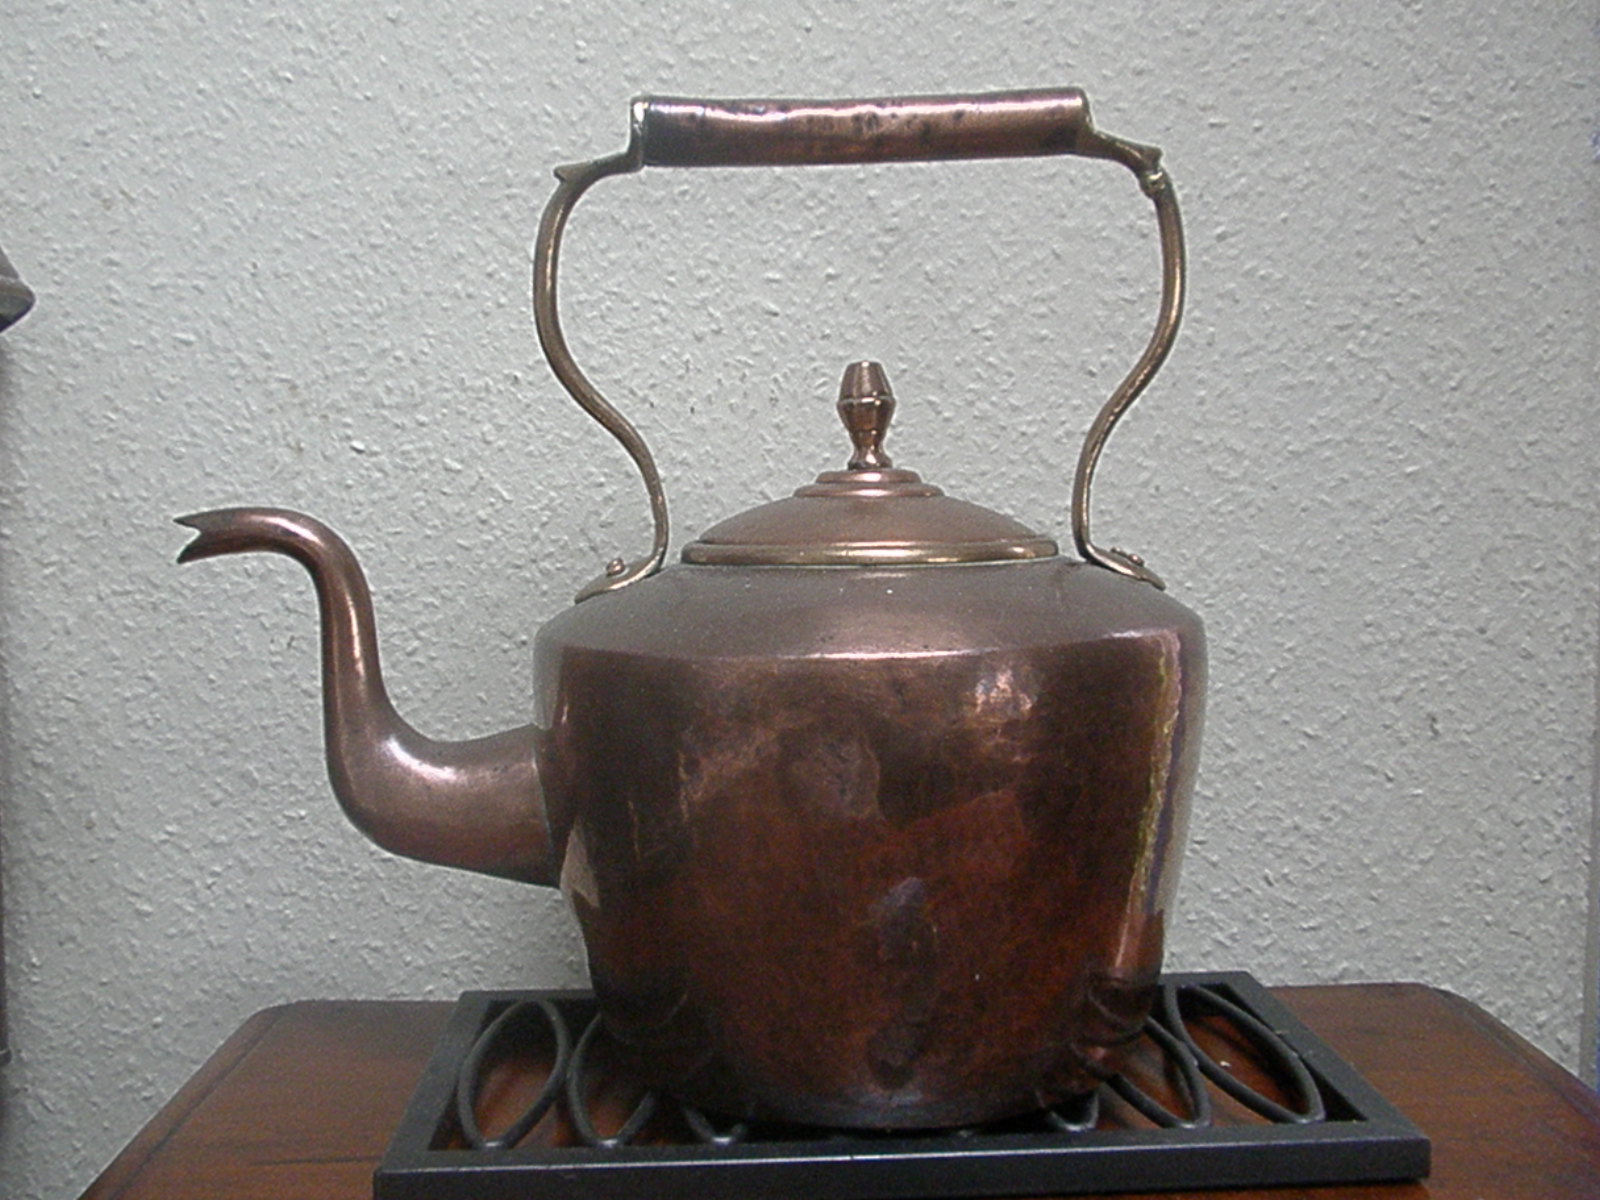 an antique tea pot on the stove top